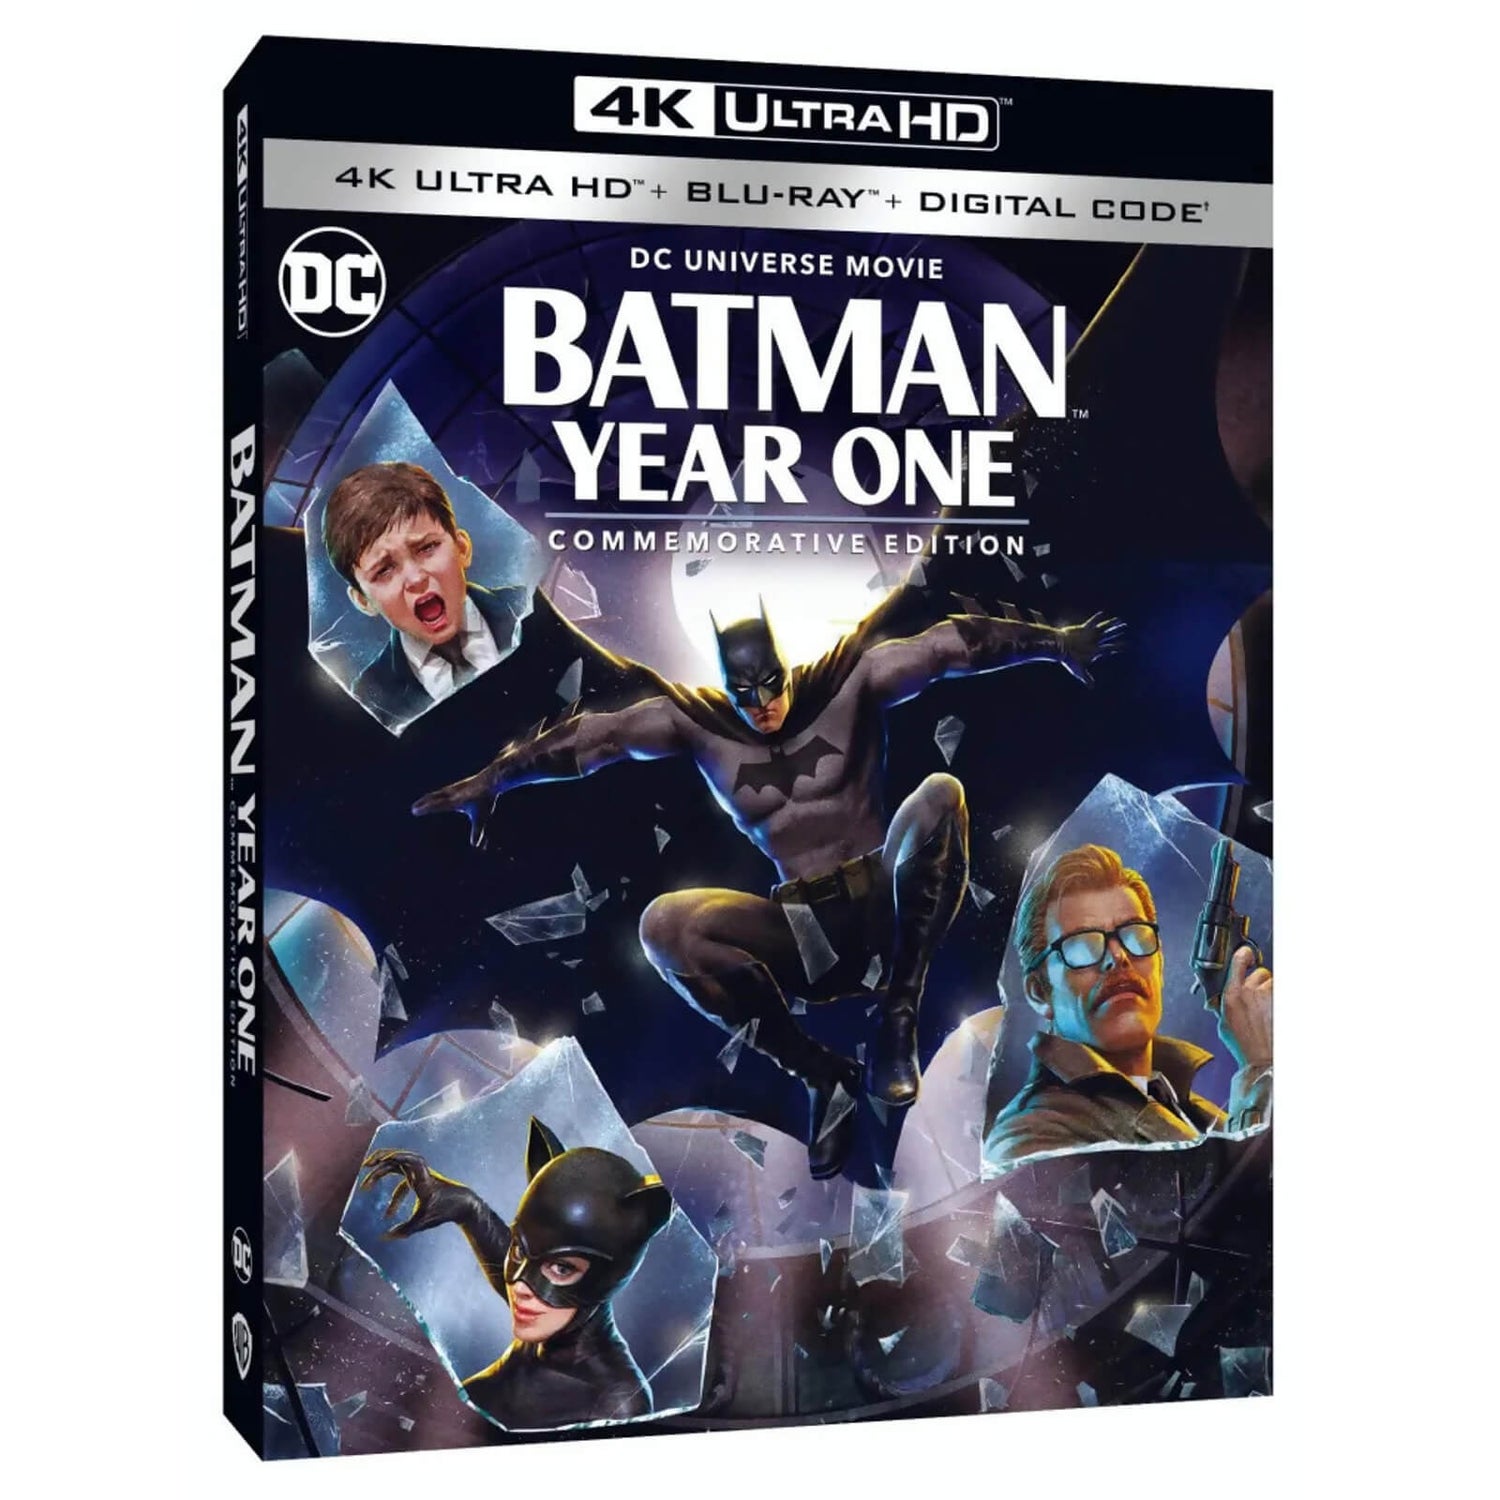 Batman: Year One: Commemorative Edition - 4K Ultra HD (Includes Blu-ray)